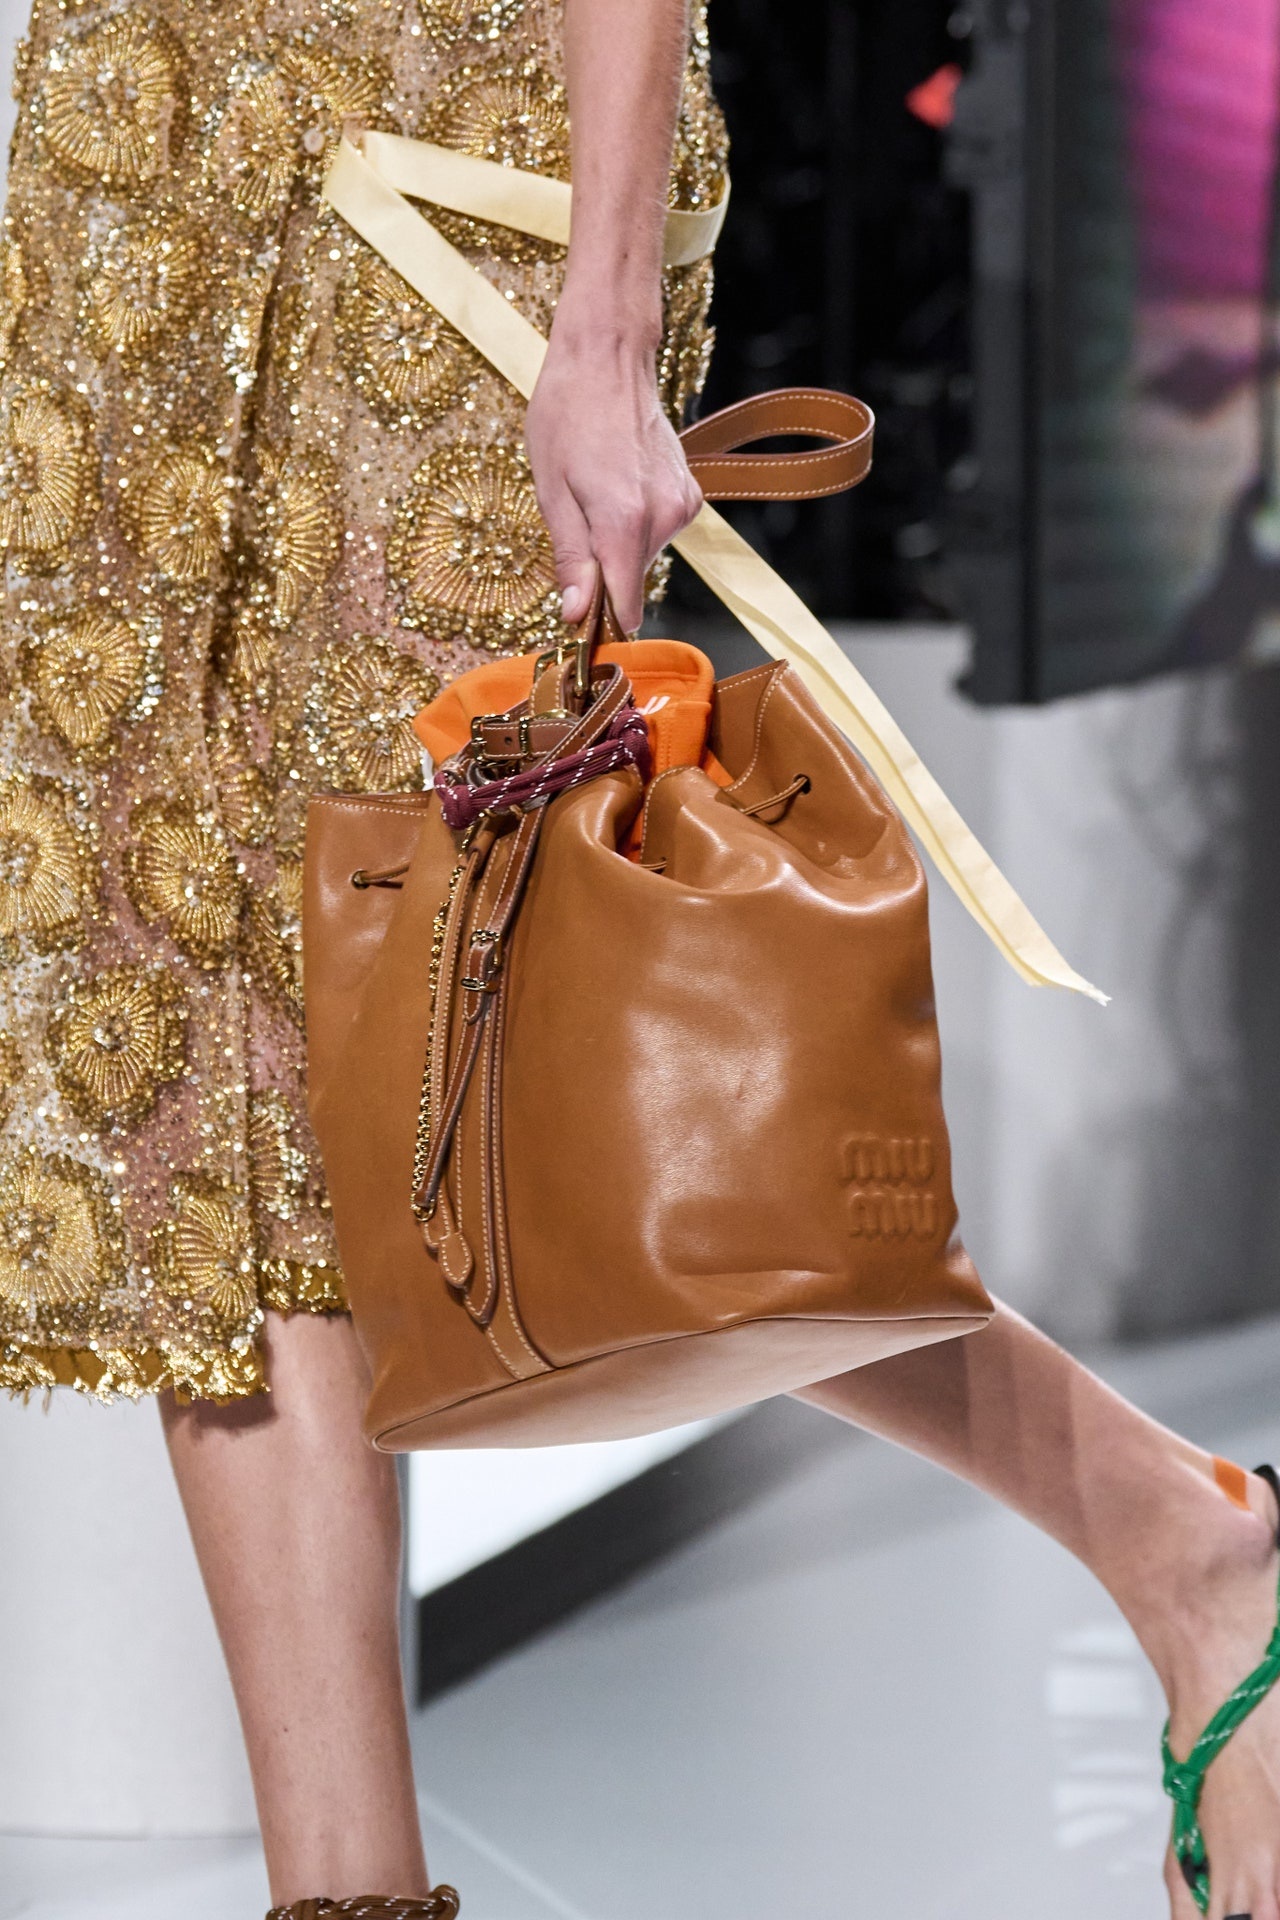 Balenciaga & Miu Miu's Overaccessorized Handbags Are Fashion